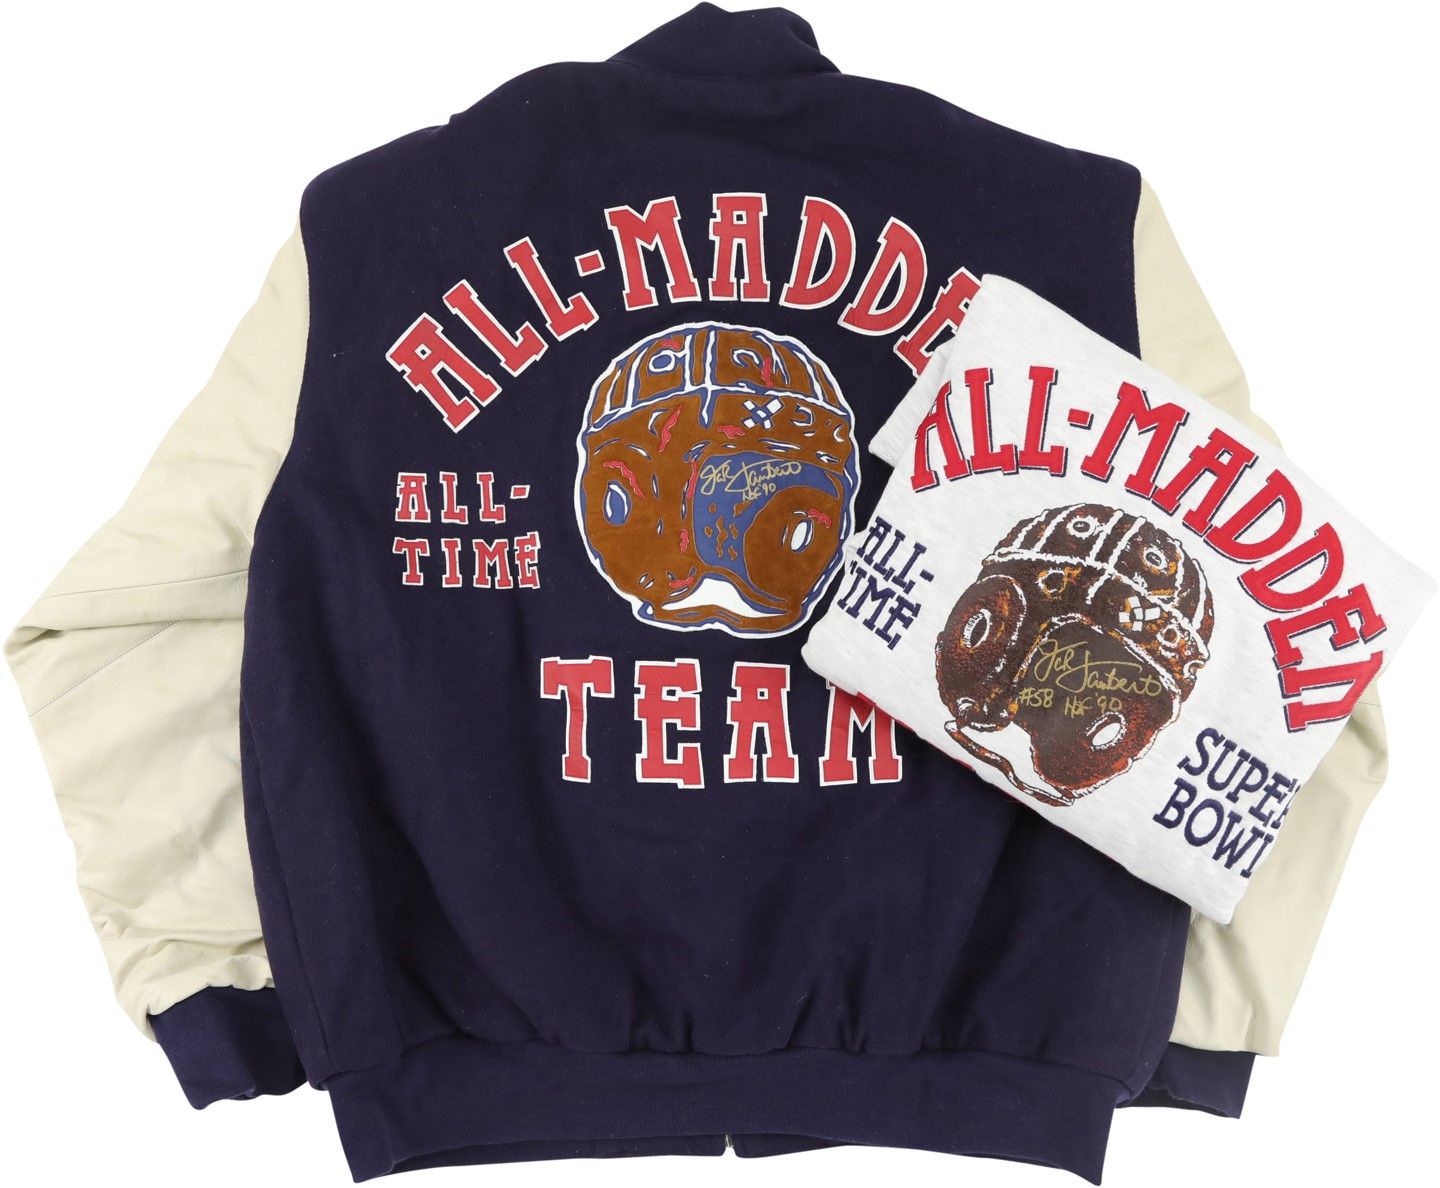 The Jack Lambert Collection - Jack Lambert All Madden All -Time Super Bowl Team Jacket and Sweatshirt